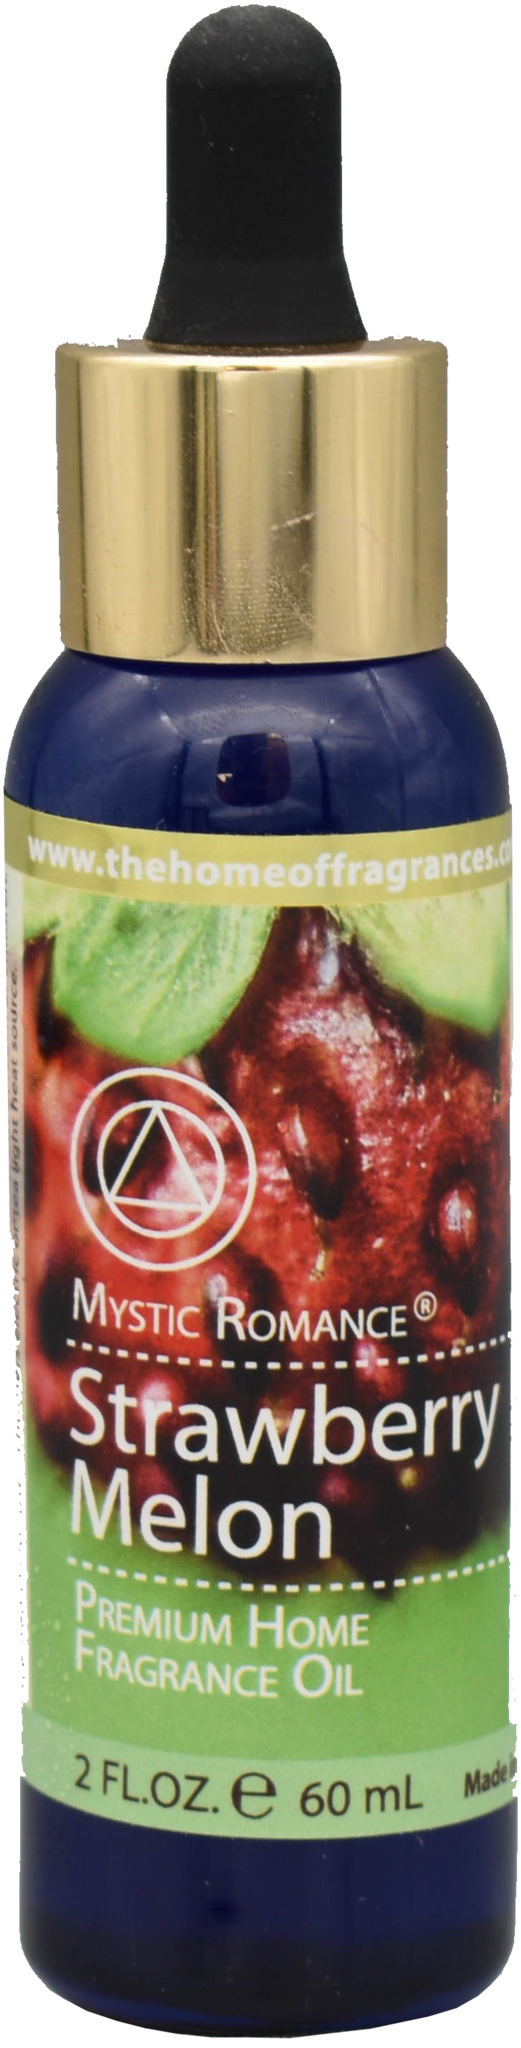 Aromar Fragrance Oil - Strawberry Melon Scented Oil, 4 oz